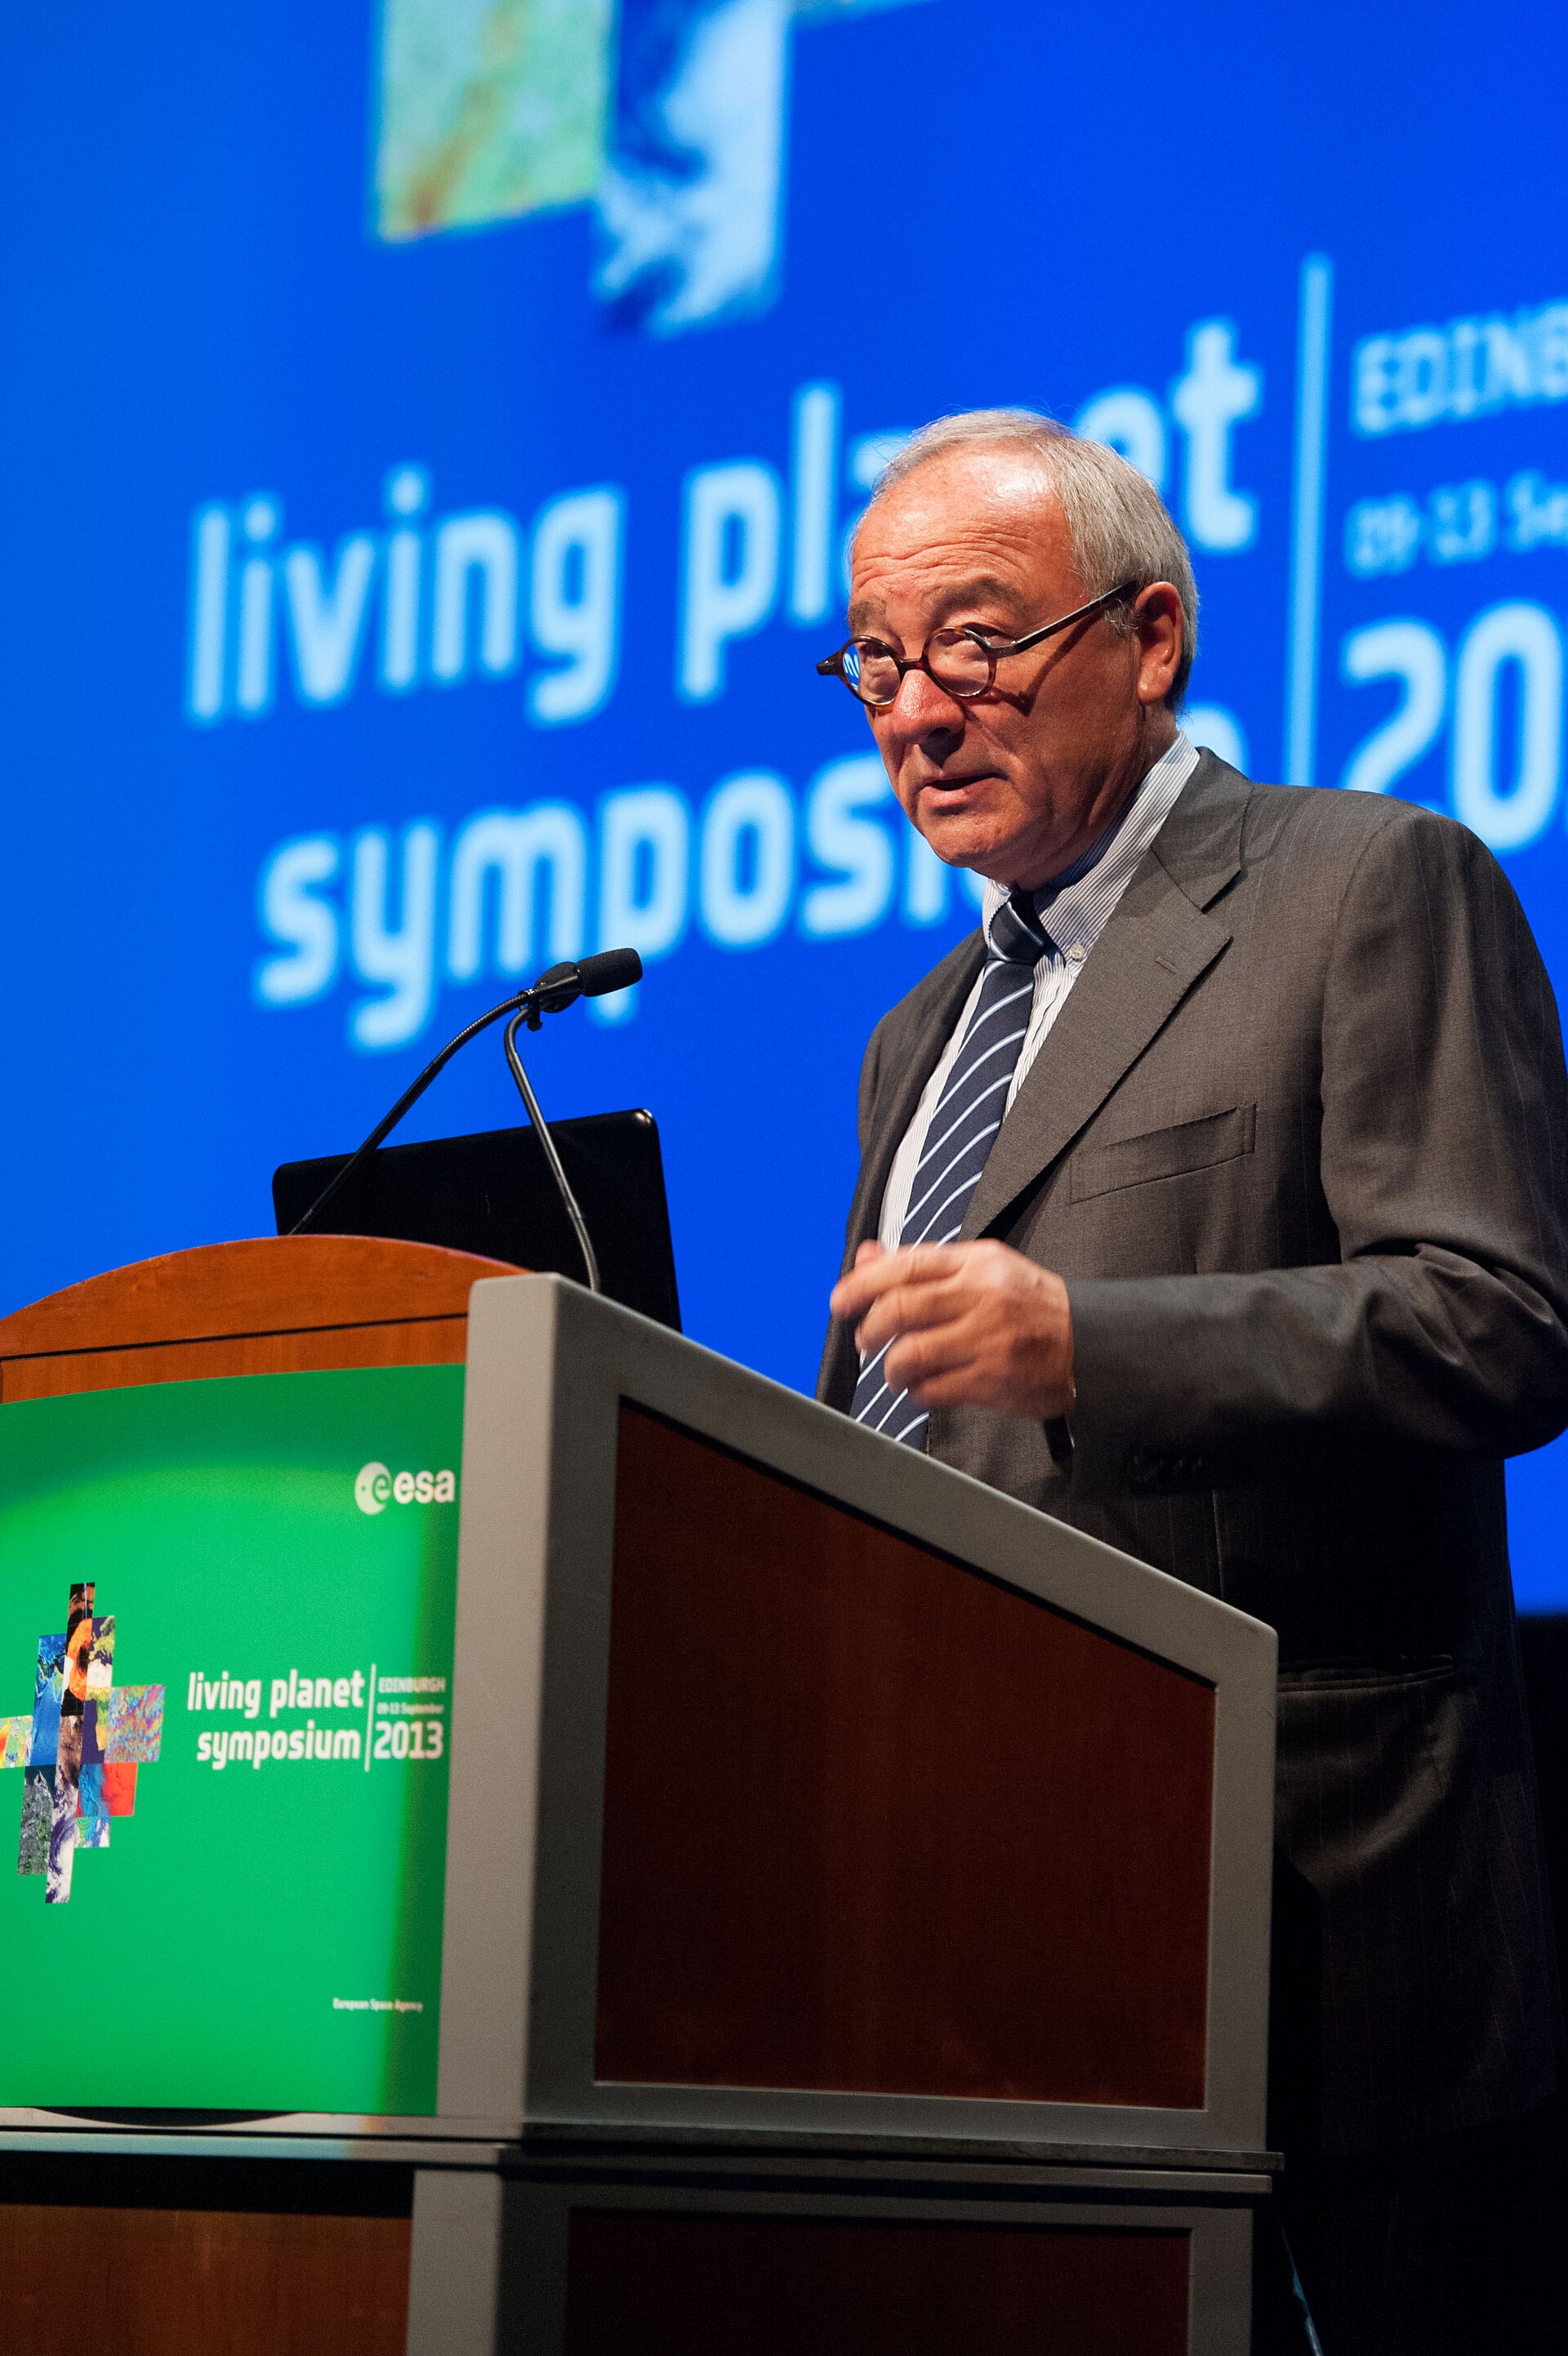 DG's opening speech at Living Planet Symposium 2013